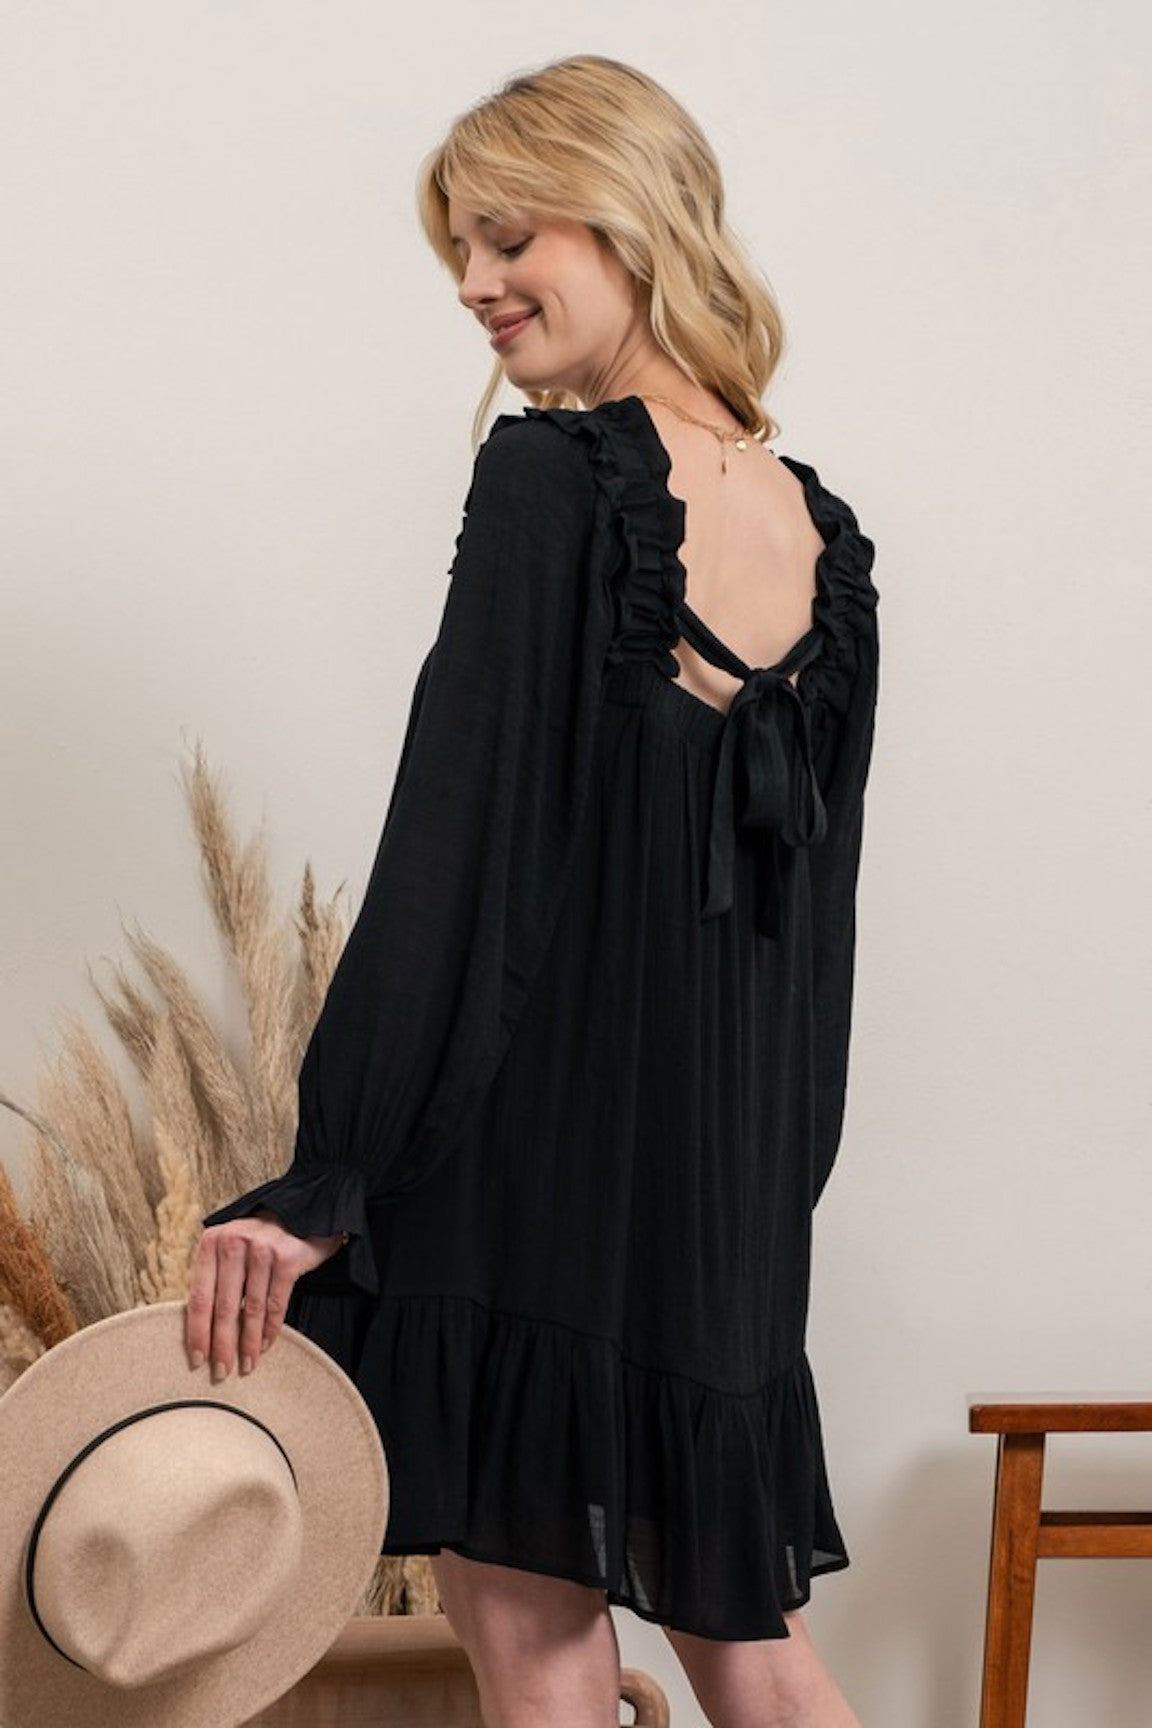 Raven Black Long Sleeve Ruffle Dress